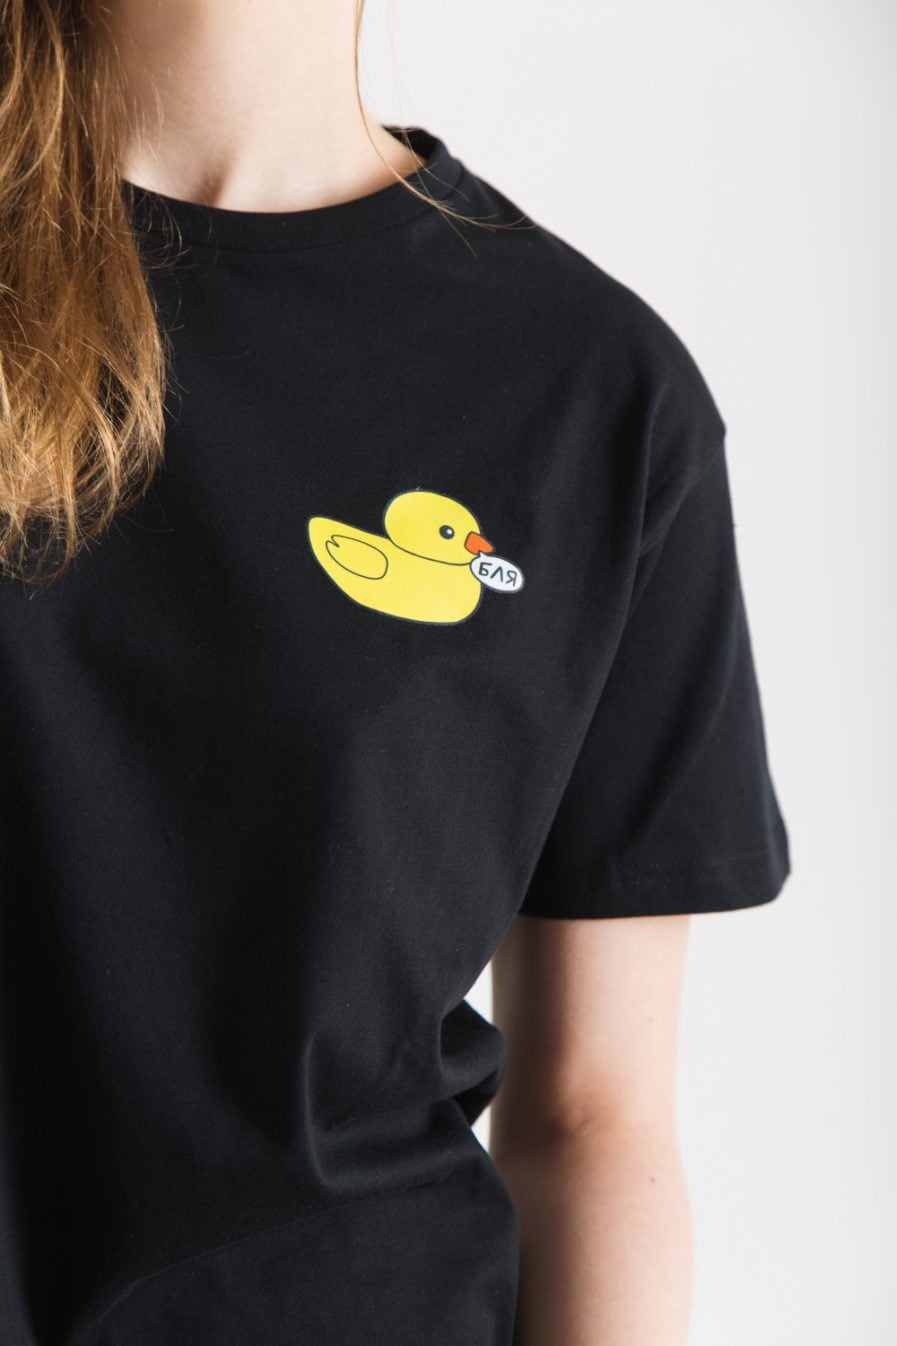 Schastia Zdorovia T-shirt "Duck" | Black